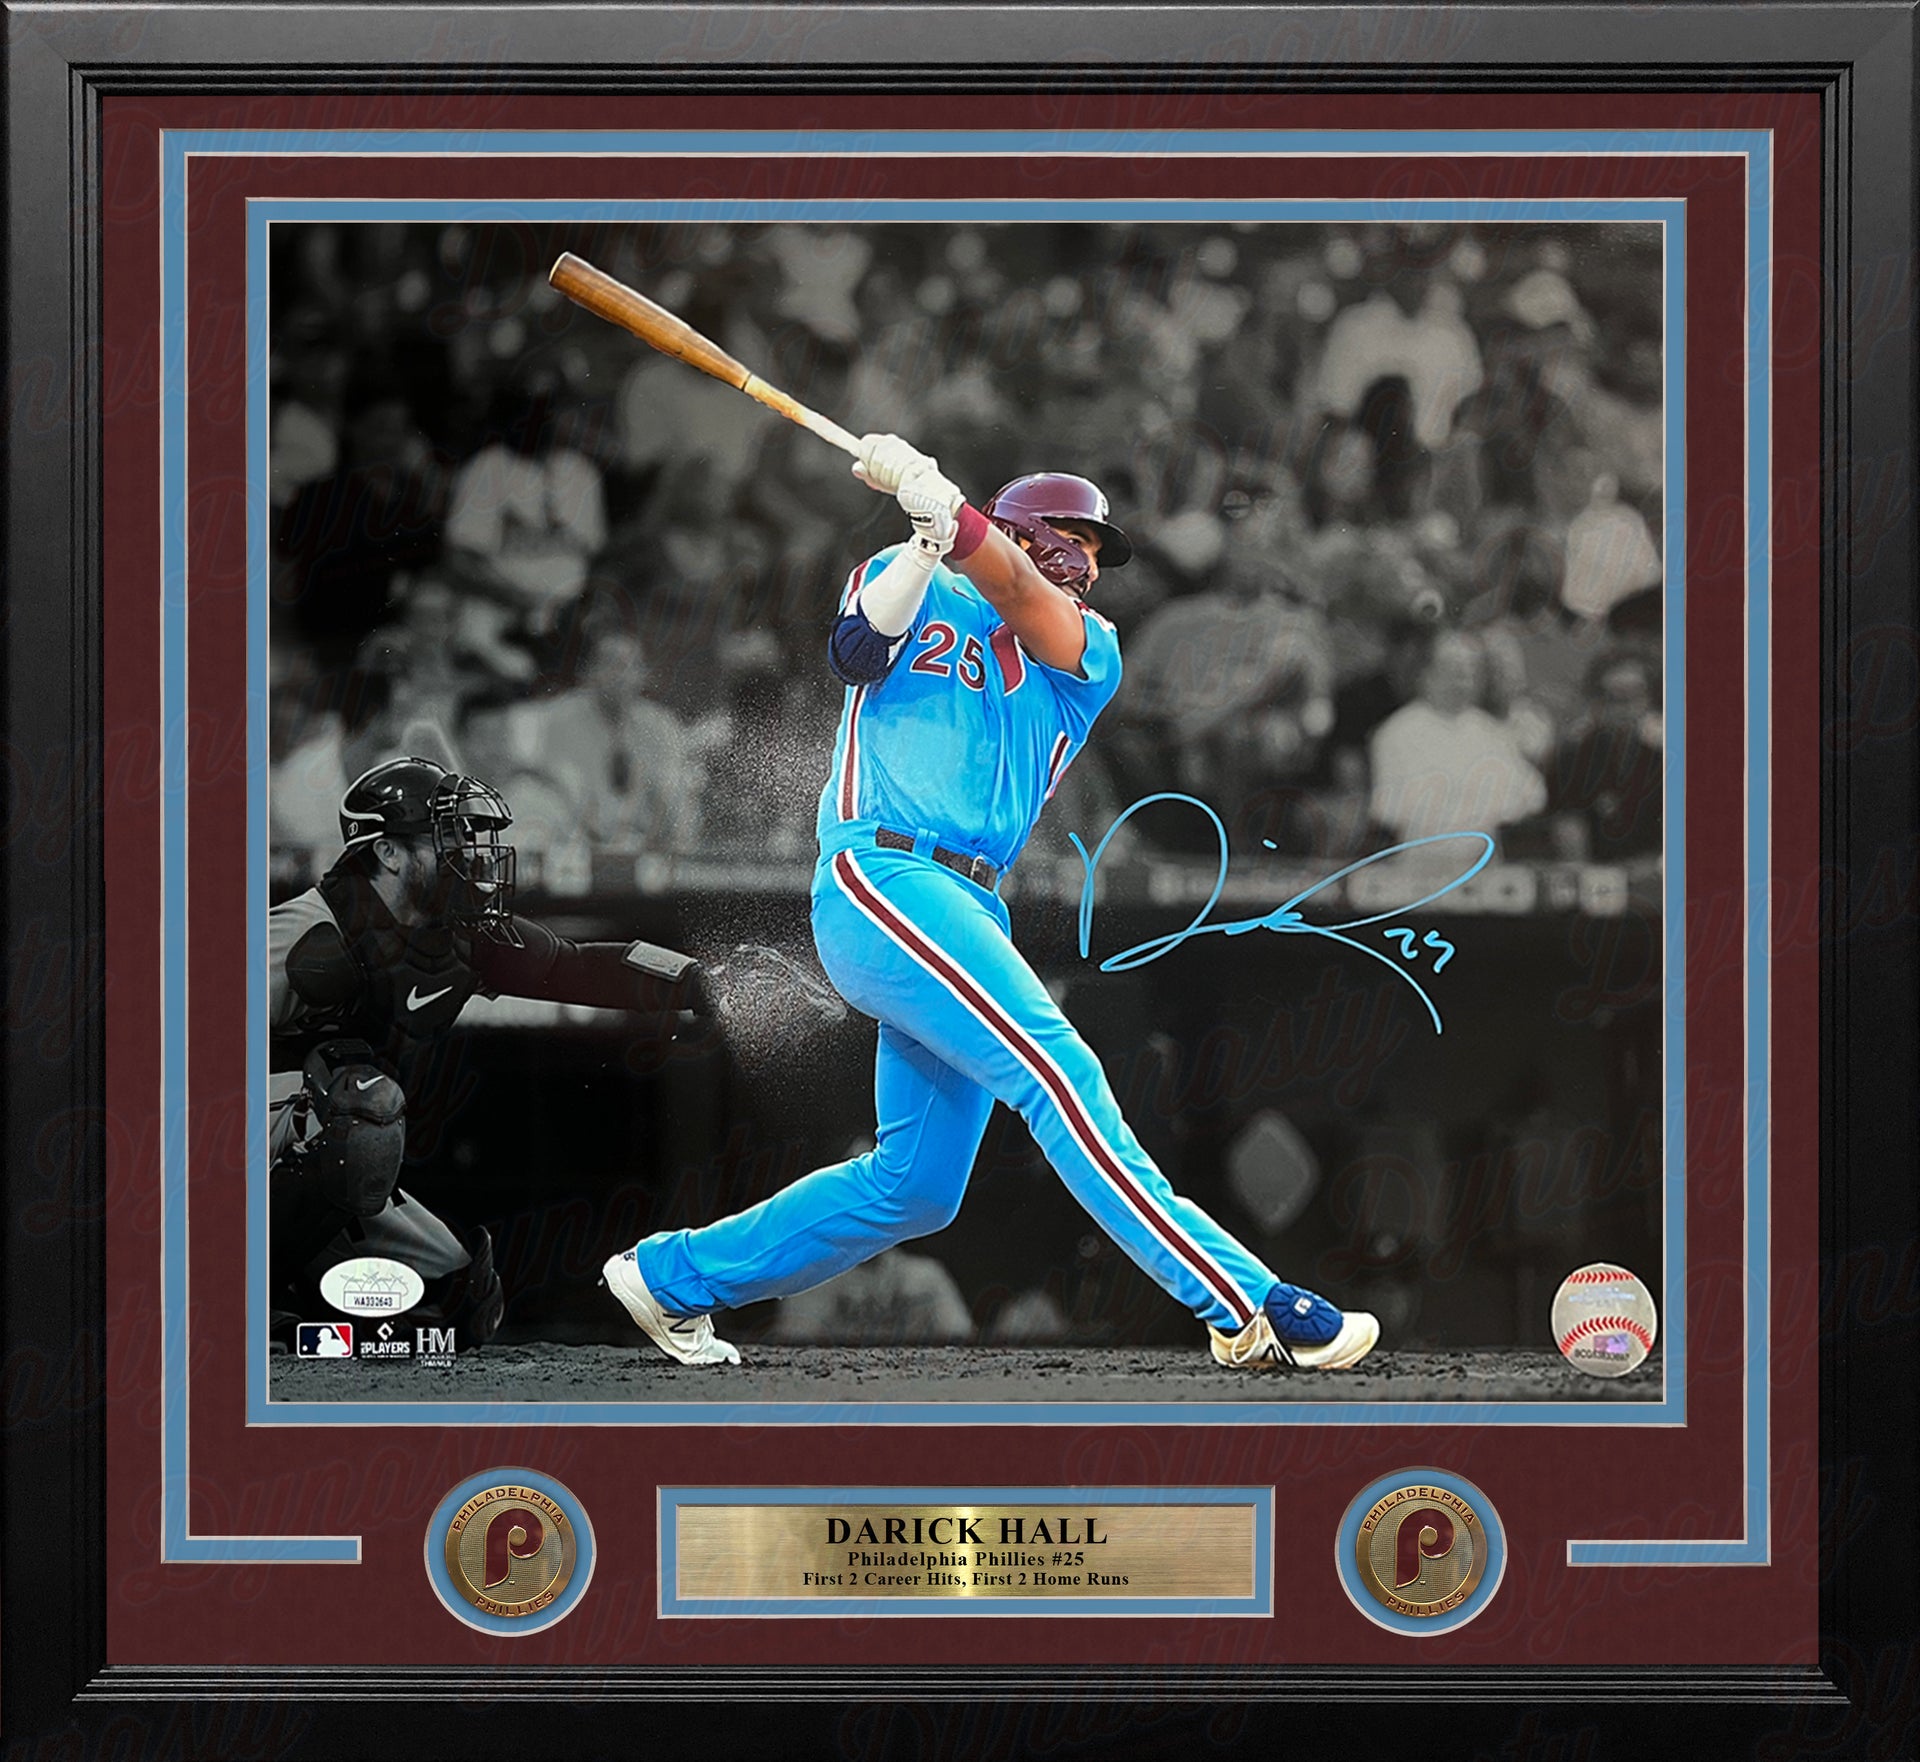 Darick Hall First Home Run Philadelphia Phillies Autographed Framed Baseball Photo - Dynasty Sports & Framing 